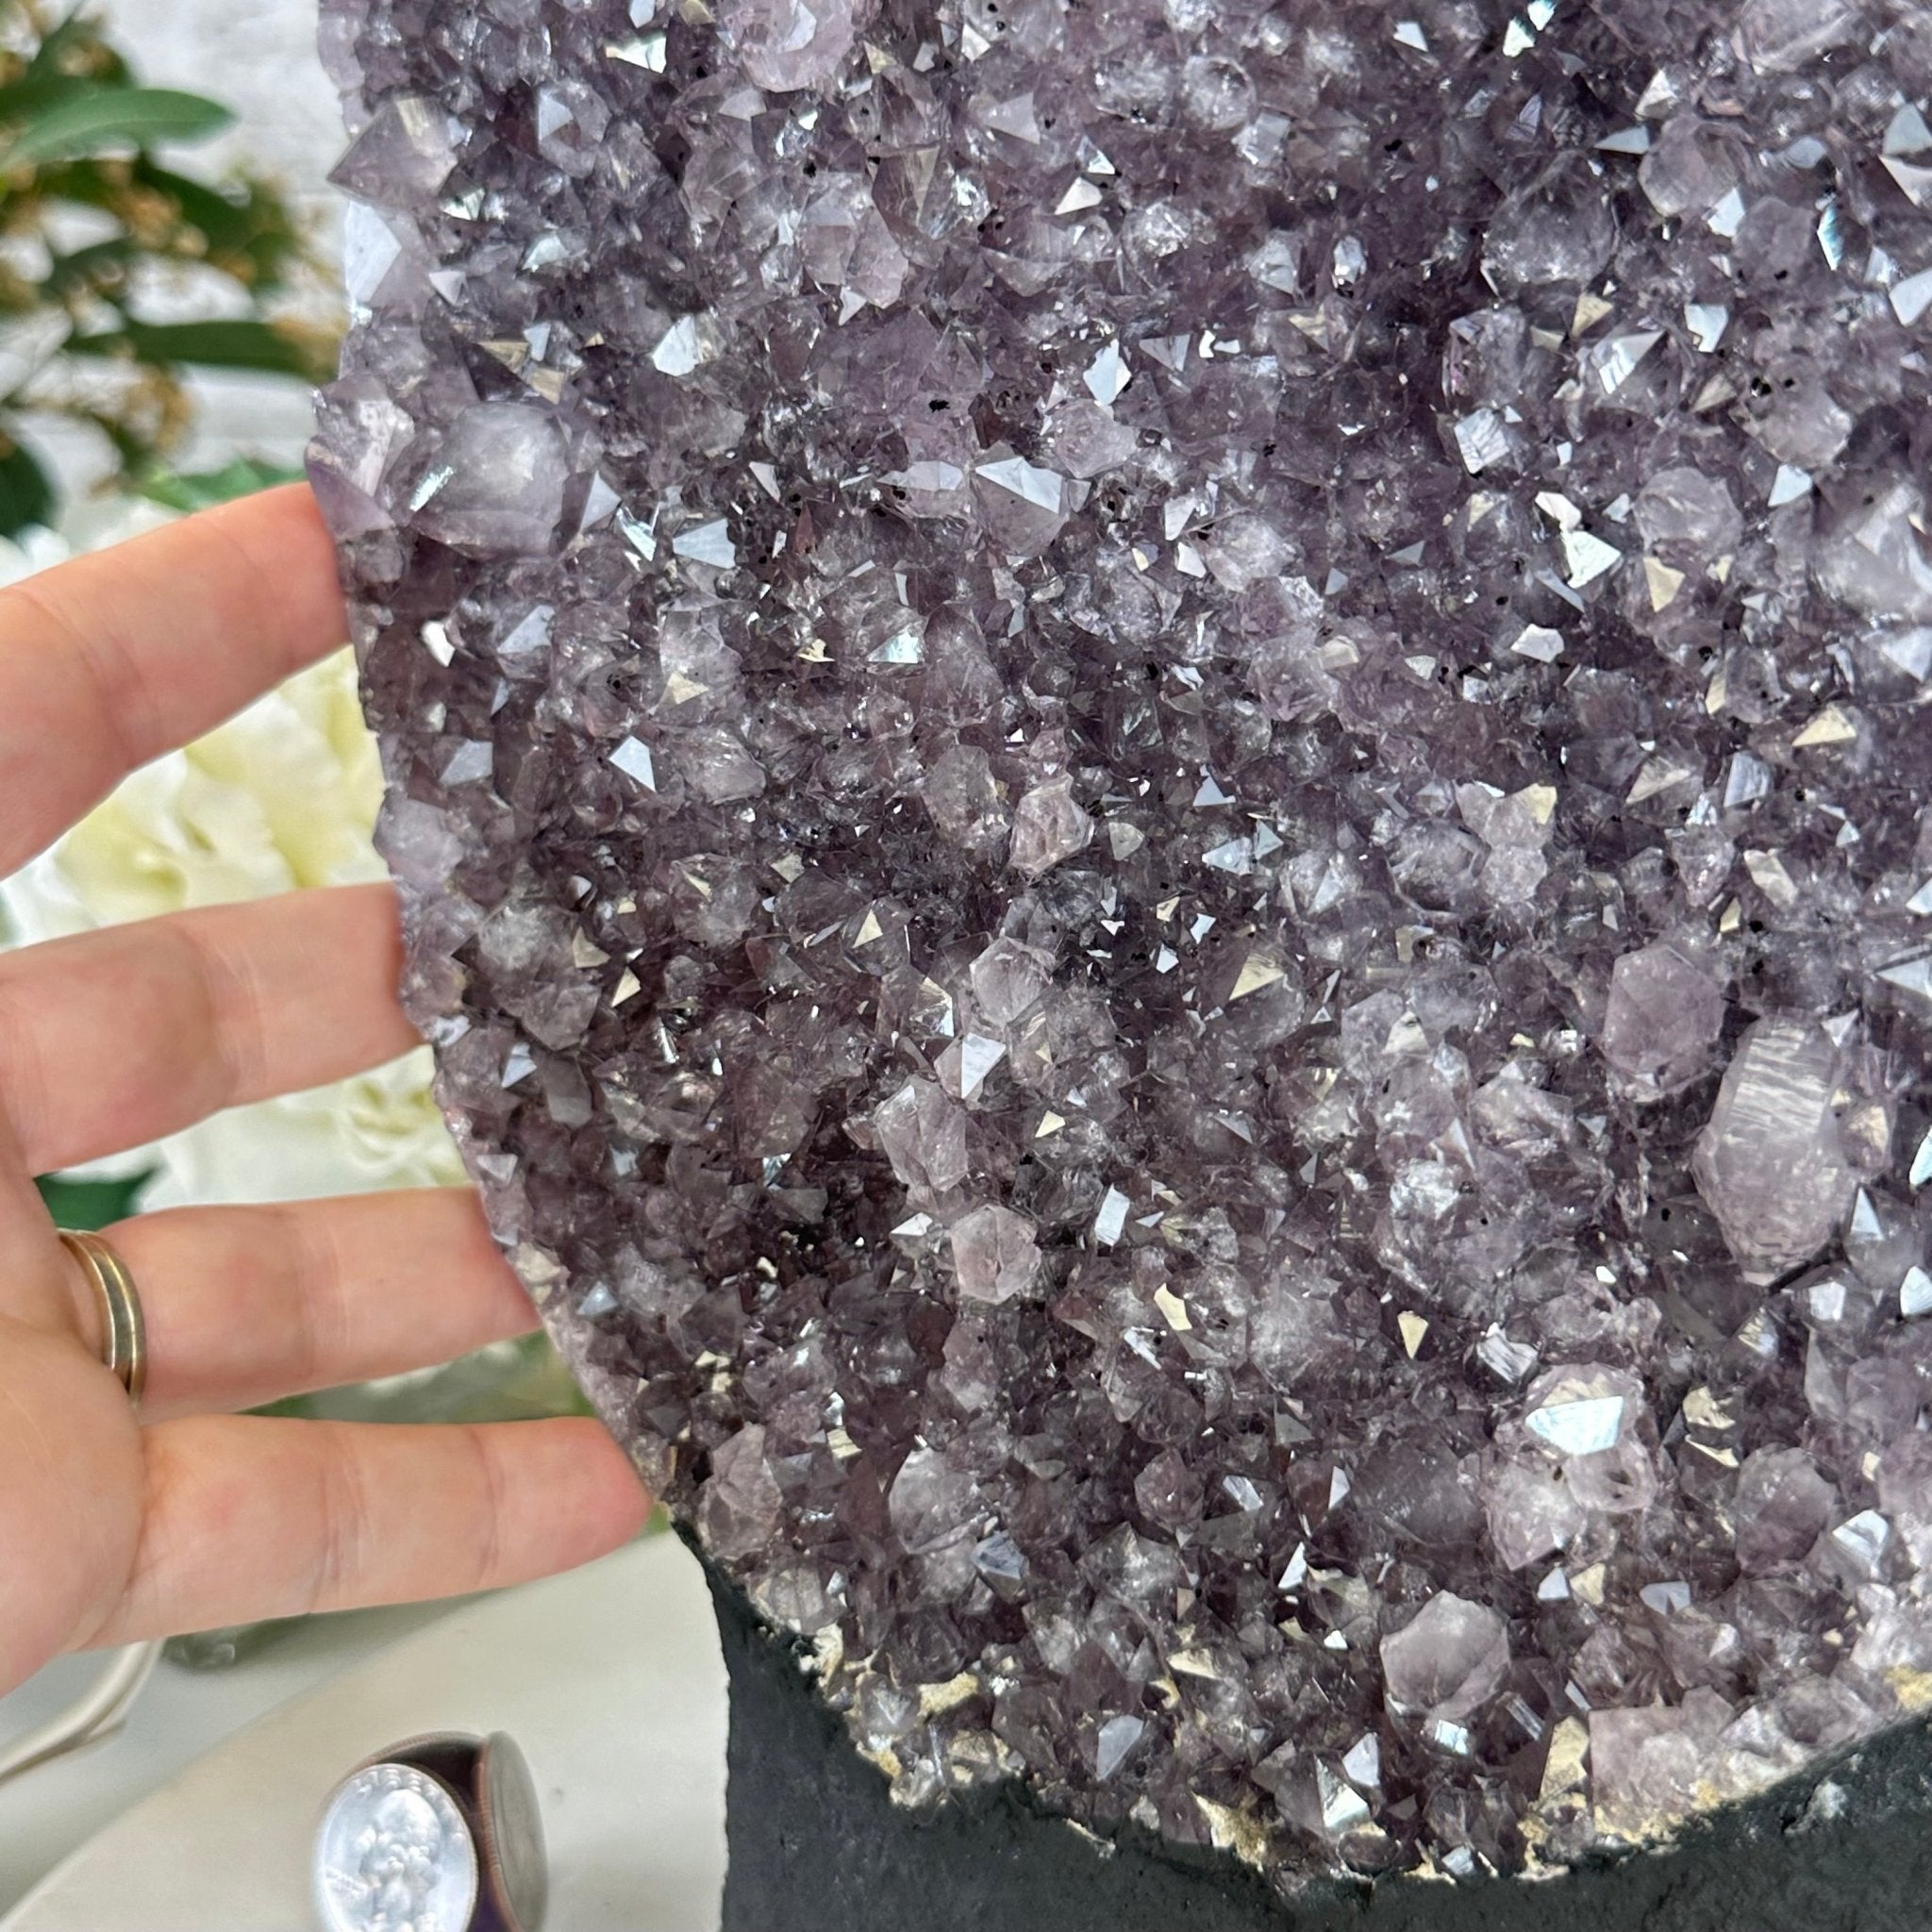 Standard Plus Quality Amethyst Crystal on Cement Base, 69.9 lbs and 22" Tall #5614-0097 - Brazil GemsBrazil GemsStandard Plus Quality Amethyst Crystal on Cement Base, 69.9 lbs and 22" Tall #5614-0097Clusters on Cement Bases5614-0097